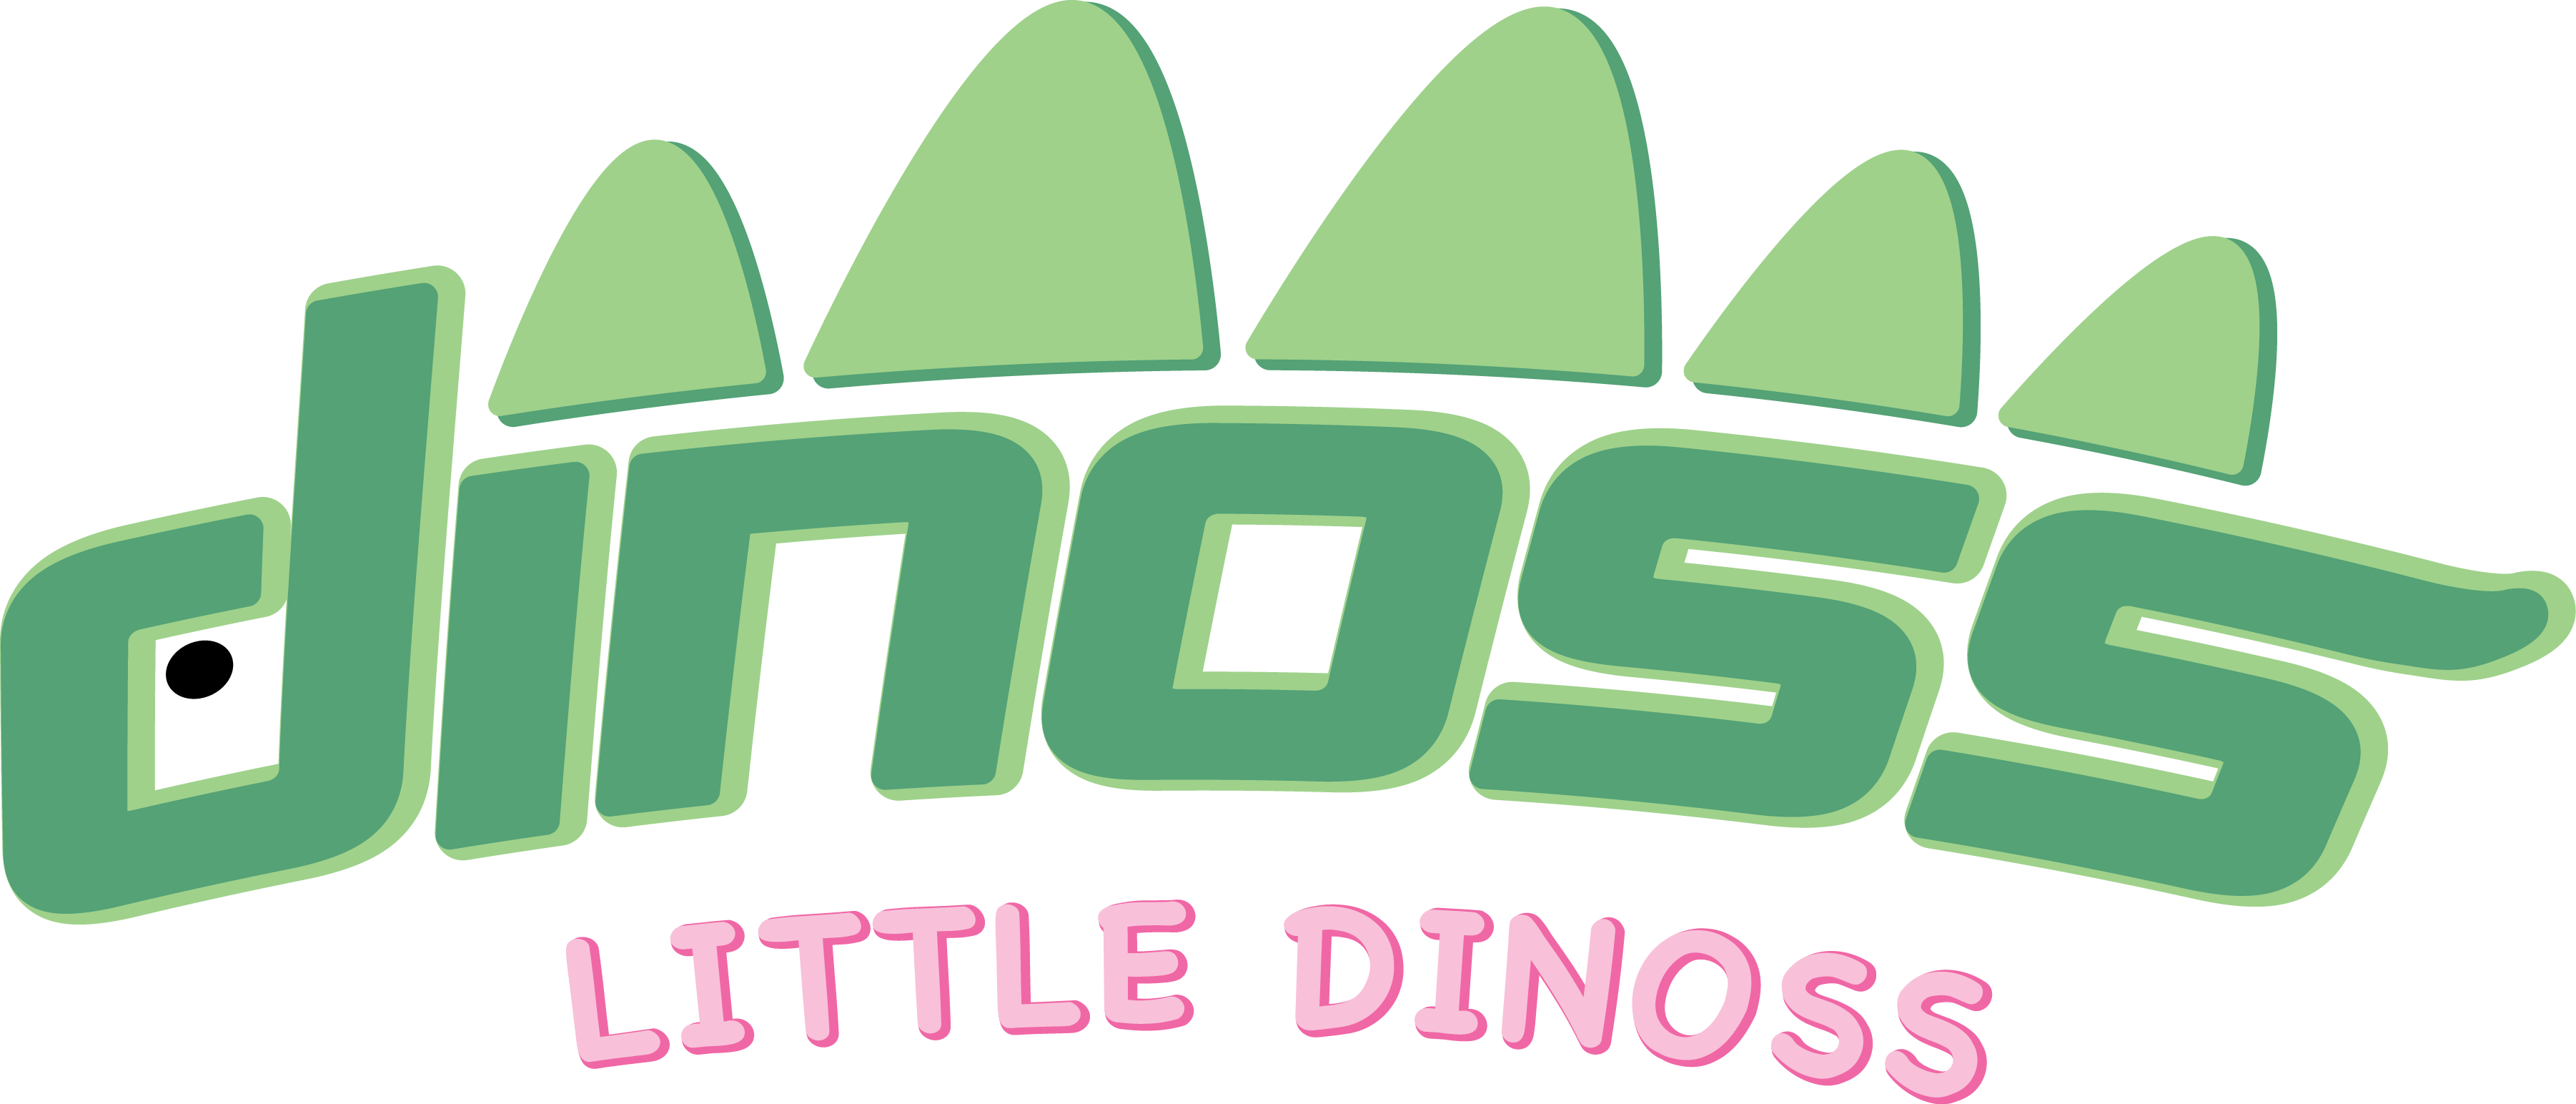 LittleDinoss 小恐龙资讯网